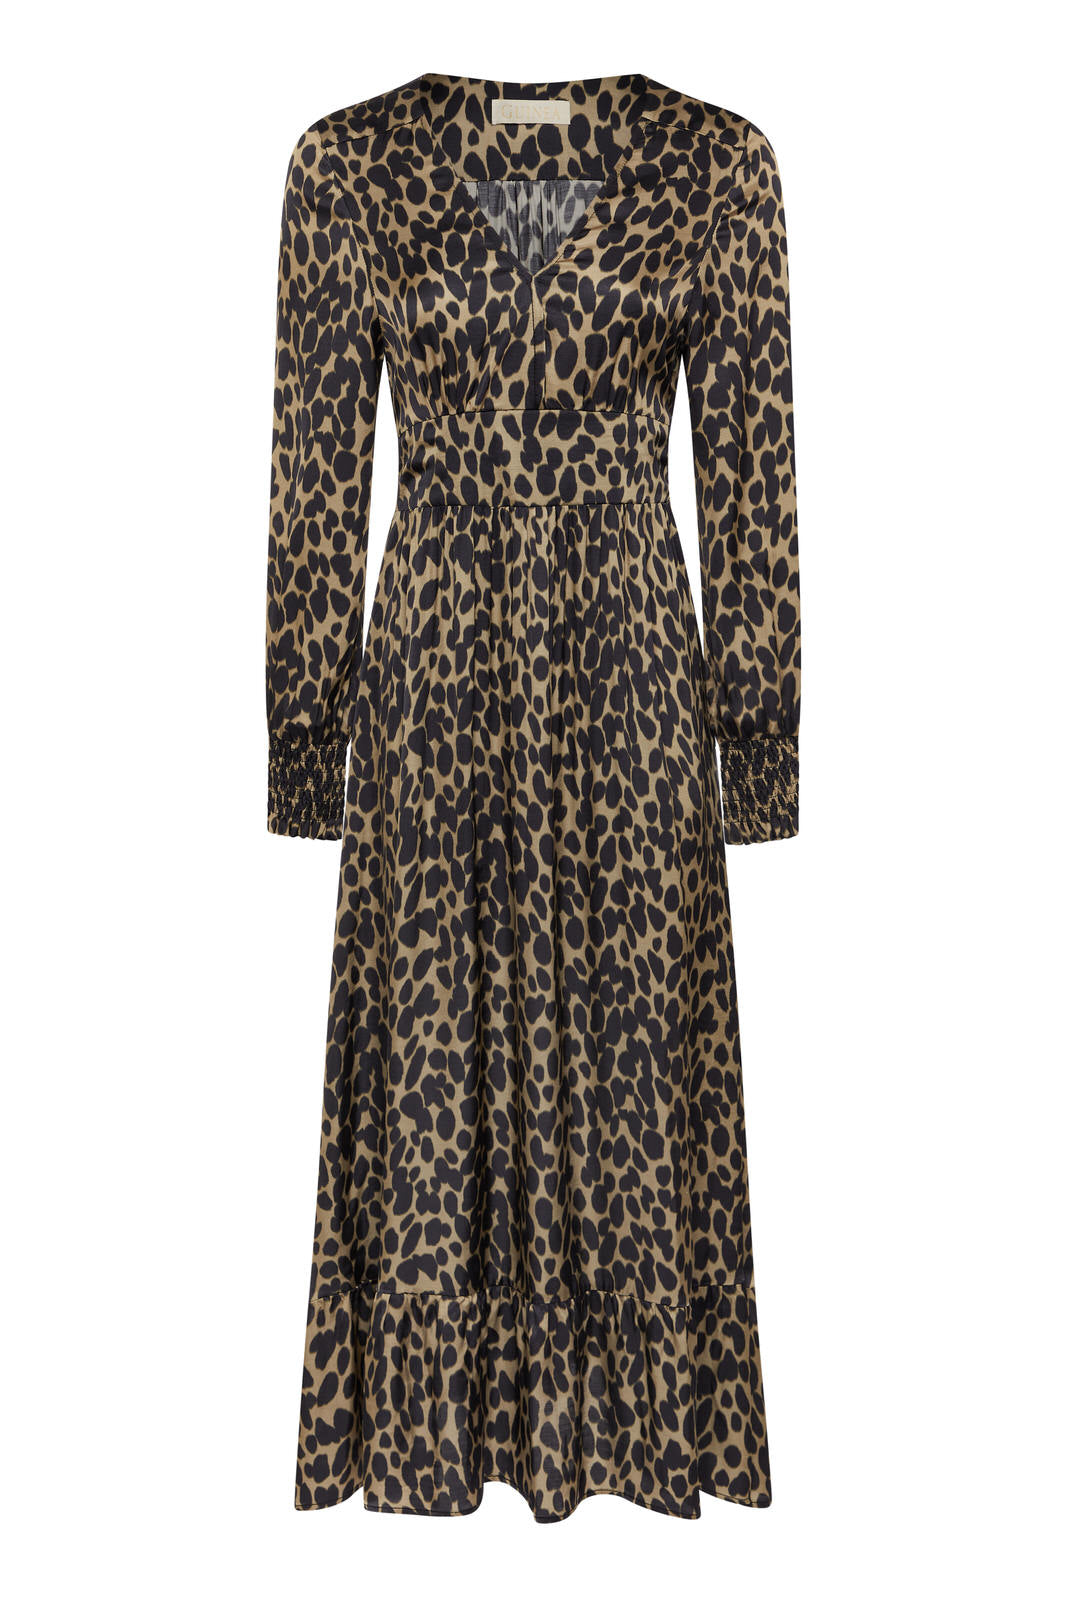 Sophie - Boho Maxi Dress - Leopard Print - 50% OFF